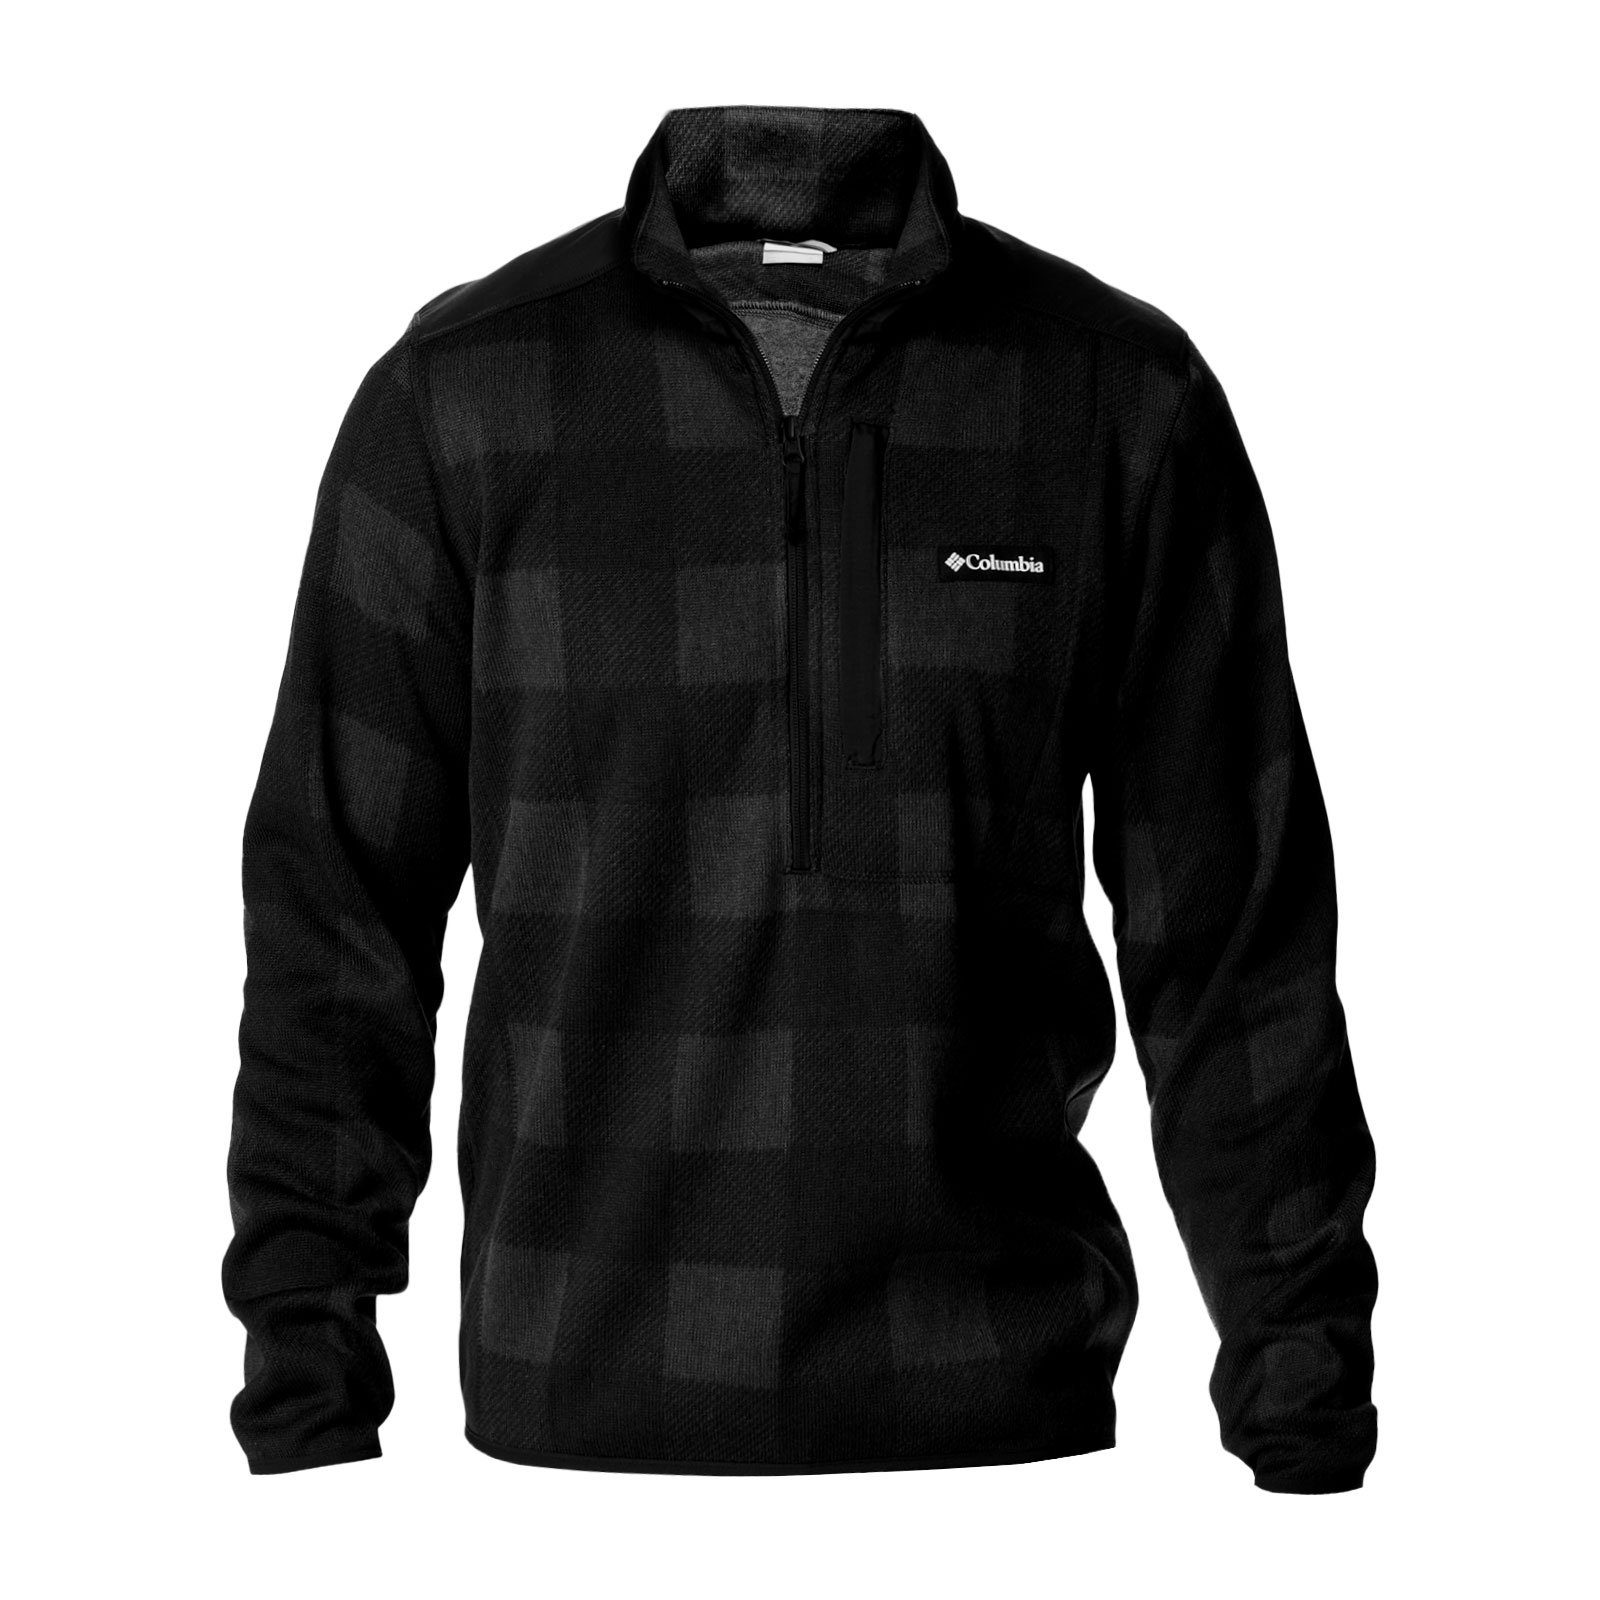 print Brust Logo 010 Weather™ black auf mit Columbia / buffalo check II Sweater Printed Strickfleece-Pullover Half-Zip der